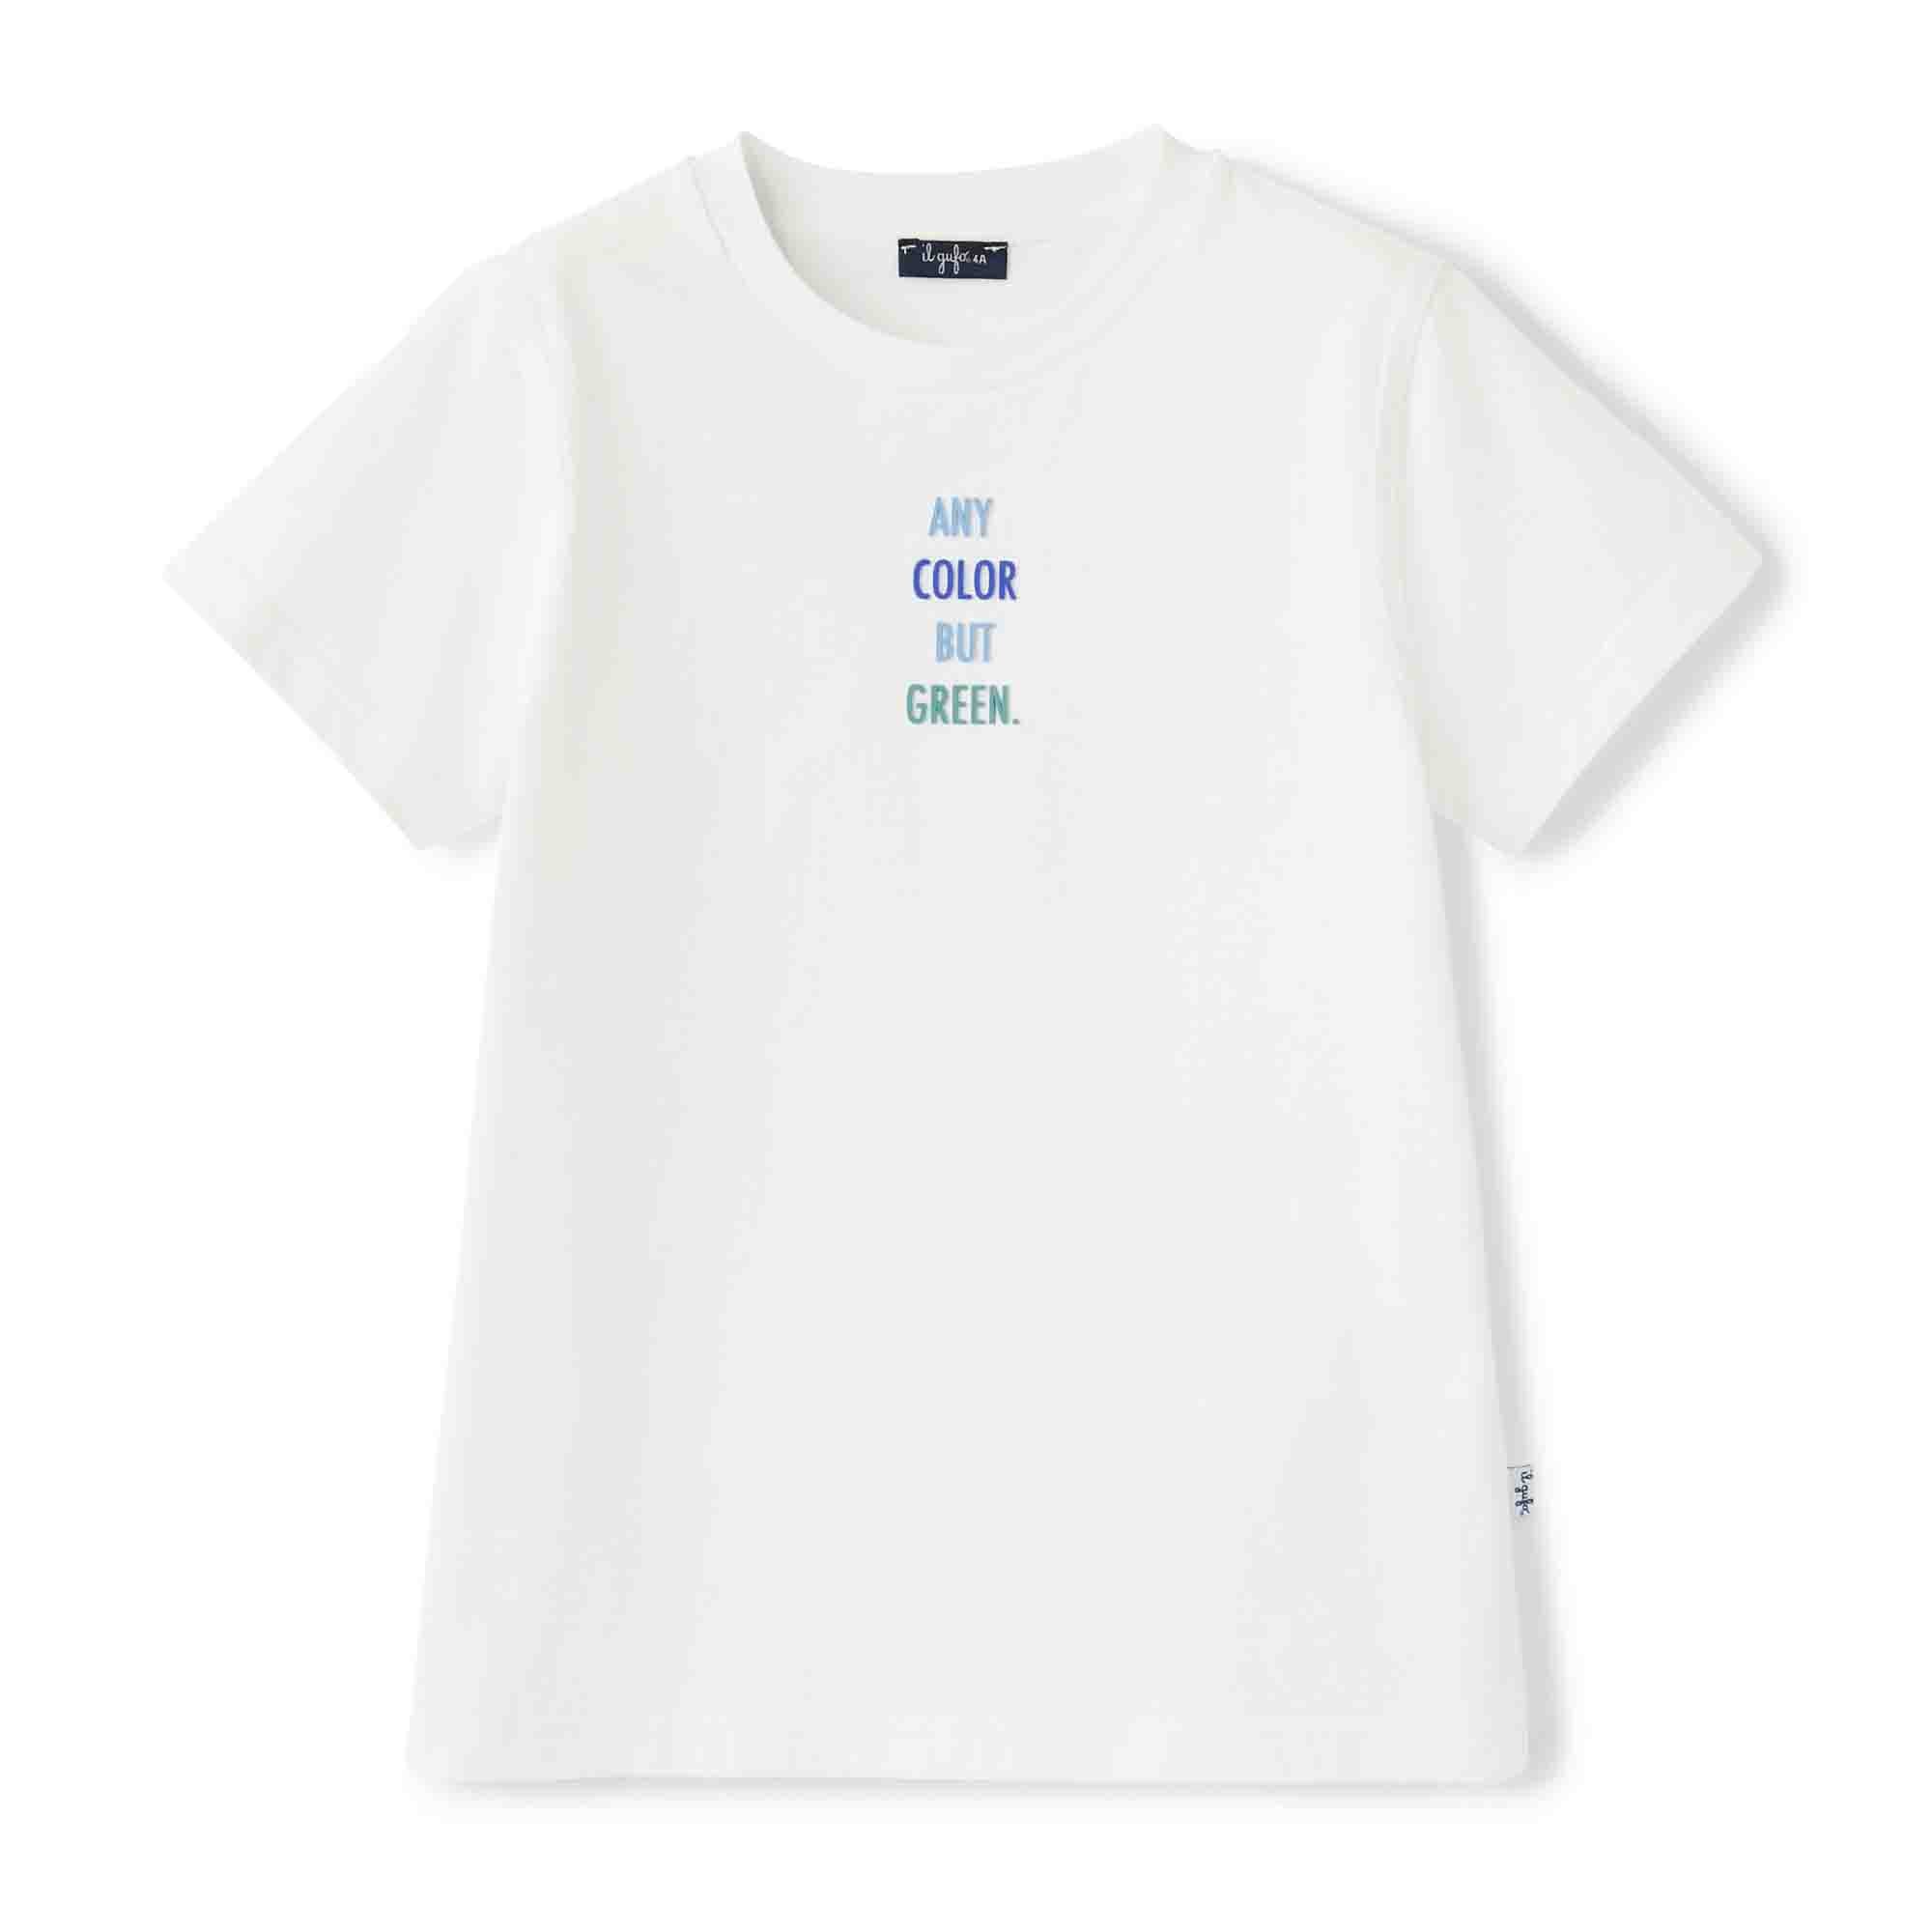 Boys & Girls White Cotton T-shirt